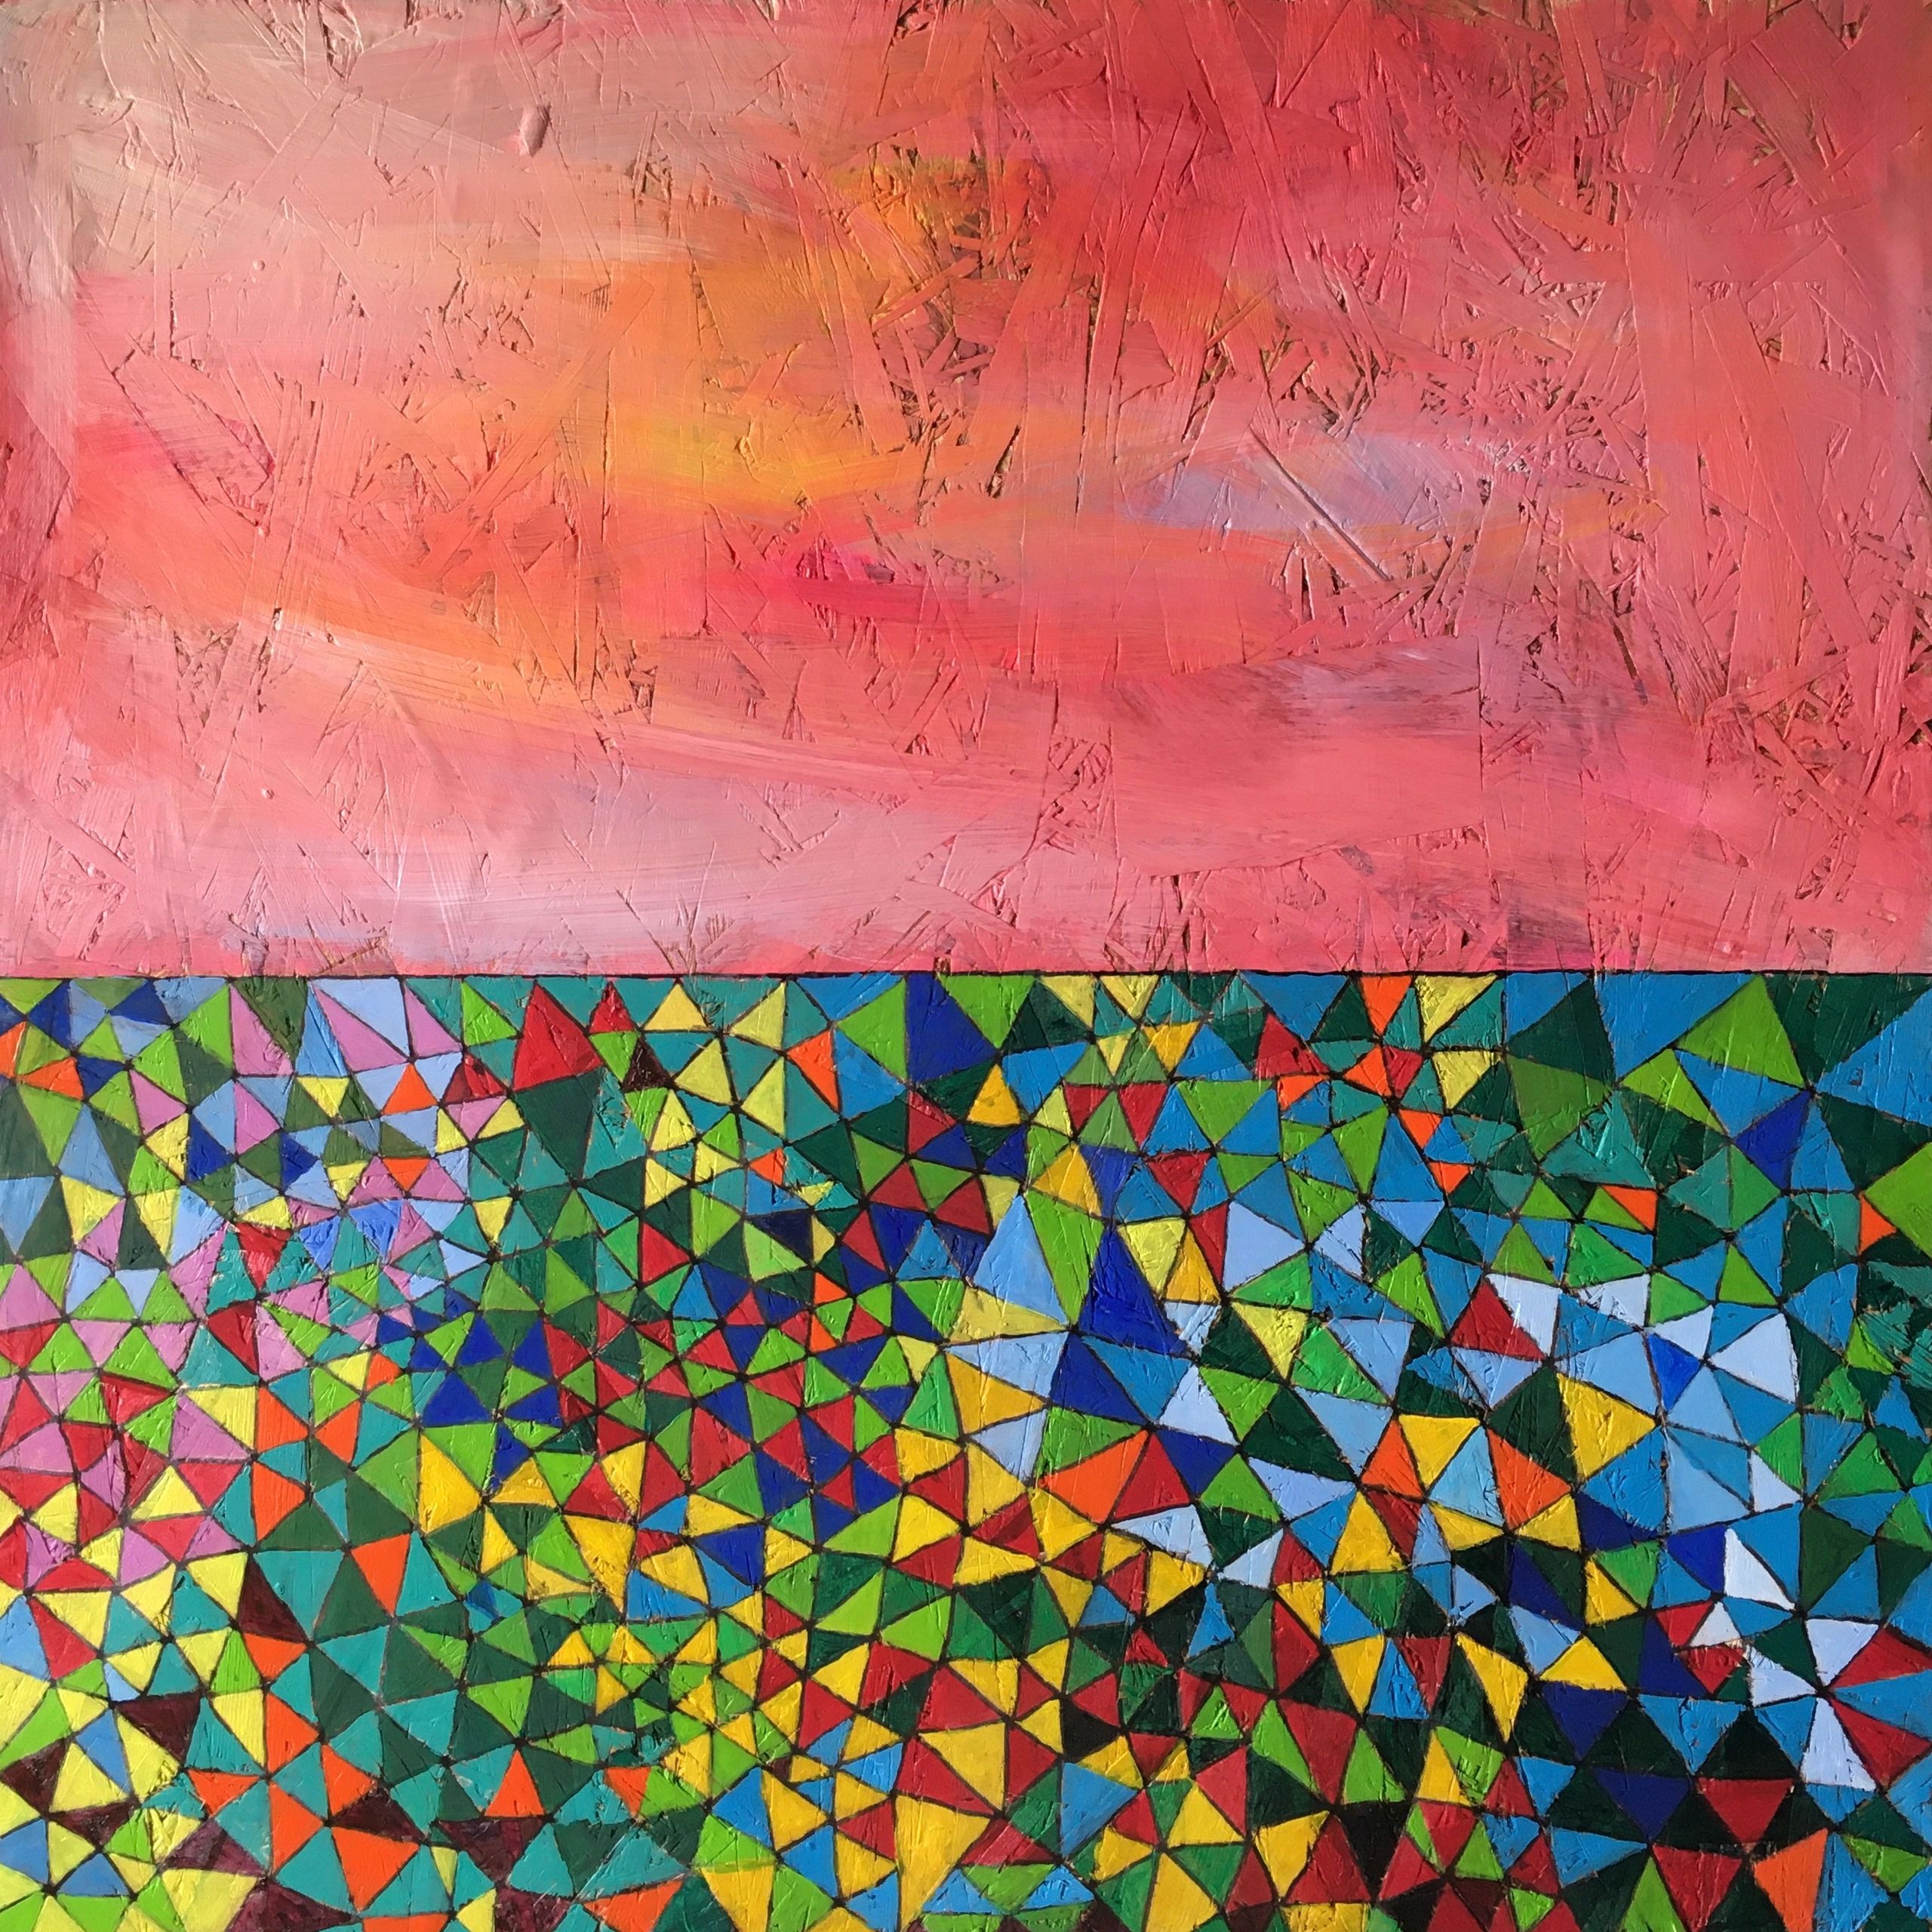 Natalie Legere
Horizons Series 
Red Skies...
acrylic on pressed wood panel, 
24 x 24”
2020